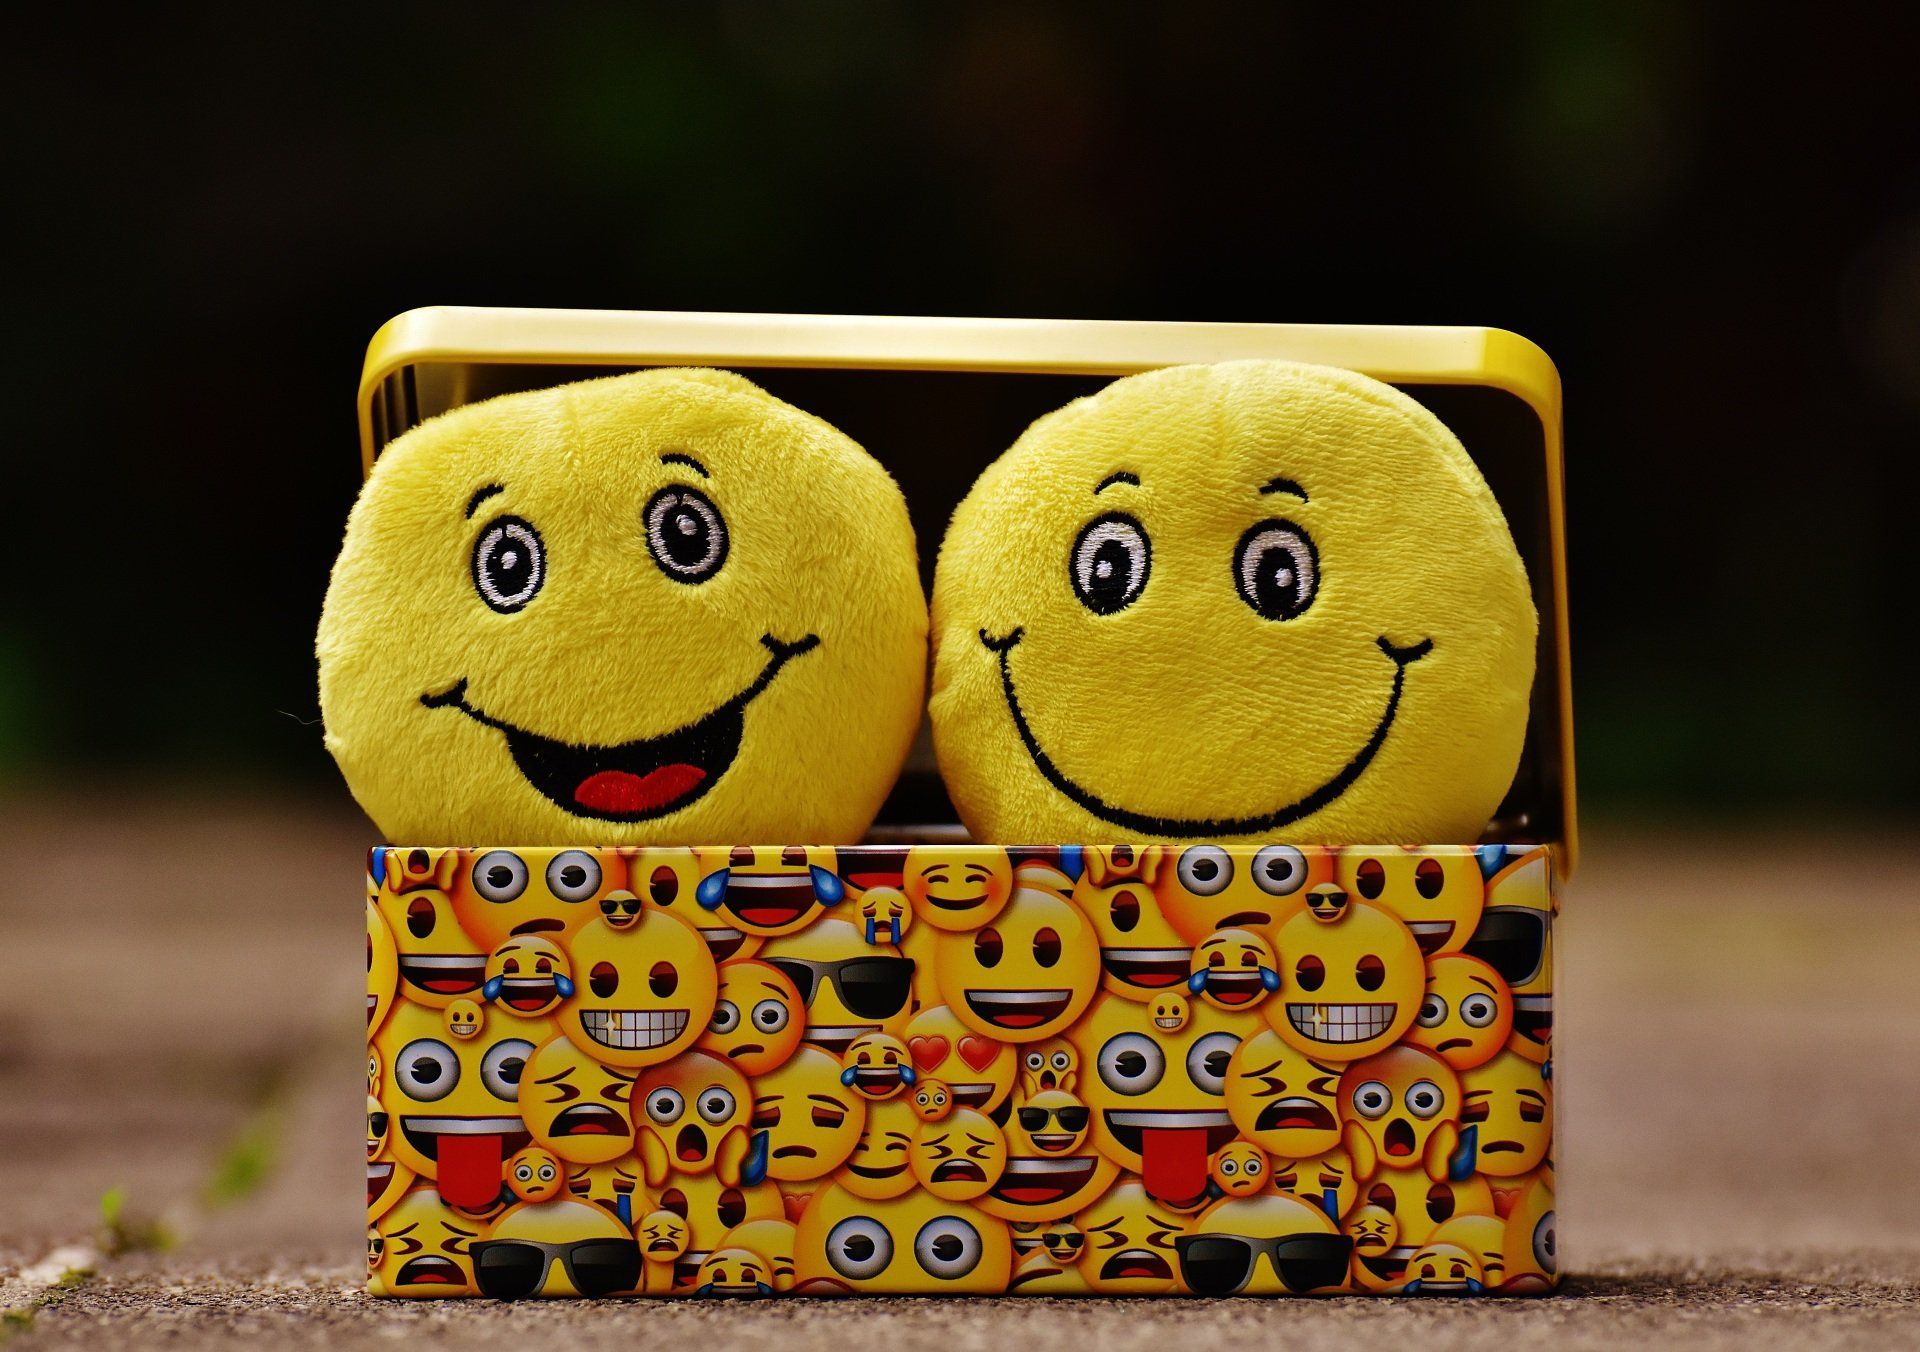 Two smiling face emoji toys